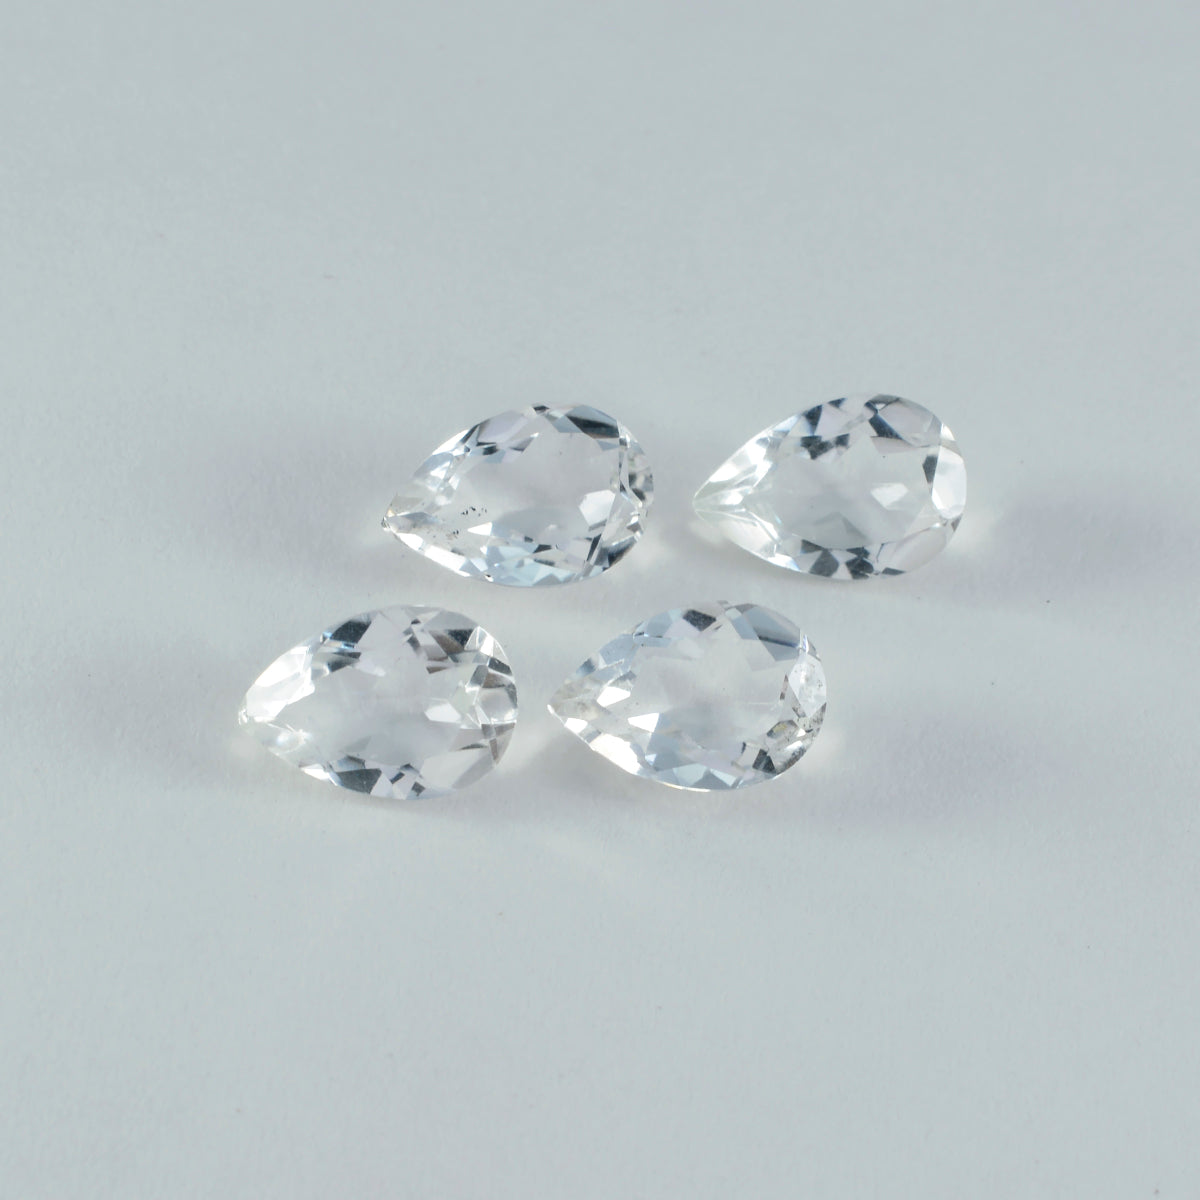 Riyogems 1PC White Crystal Quartz Faceted 7x10 mm Pear Shape startling Quality Gemstone